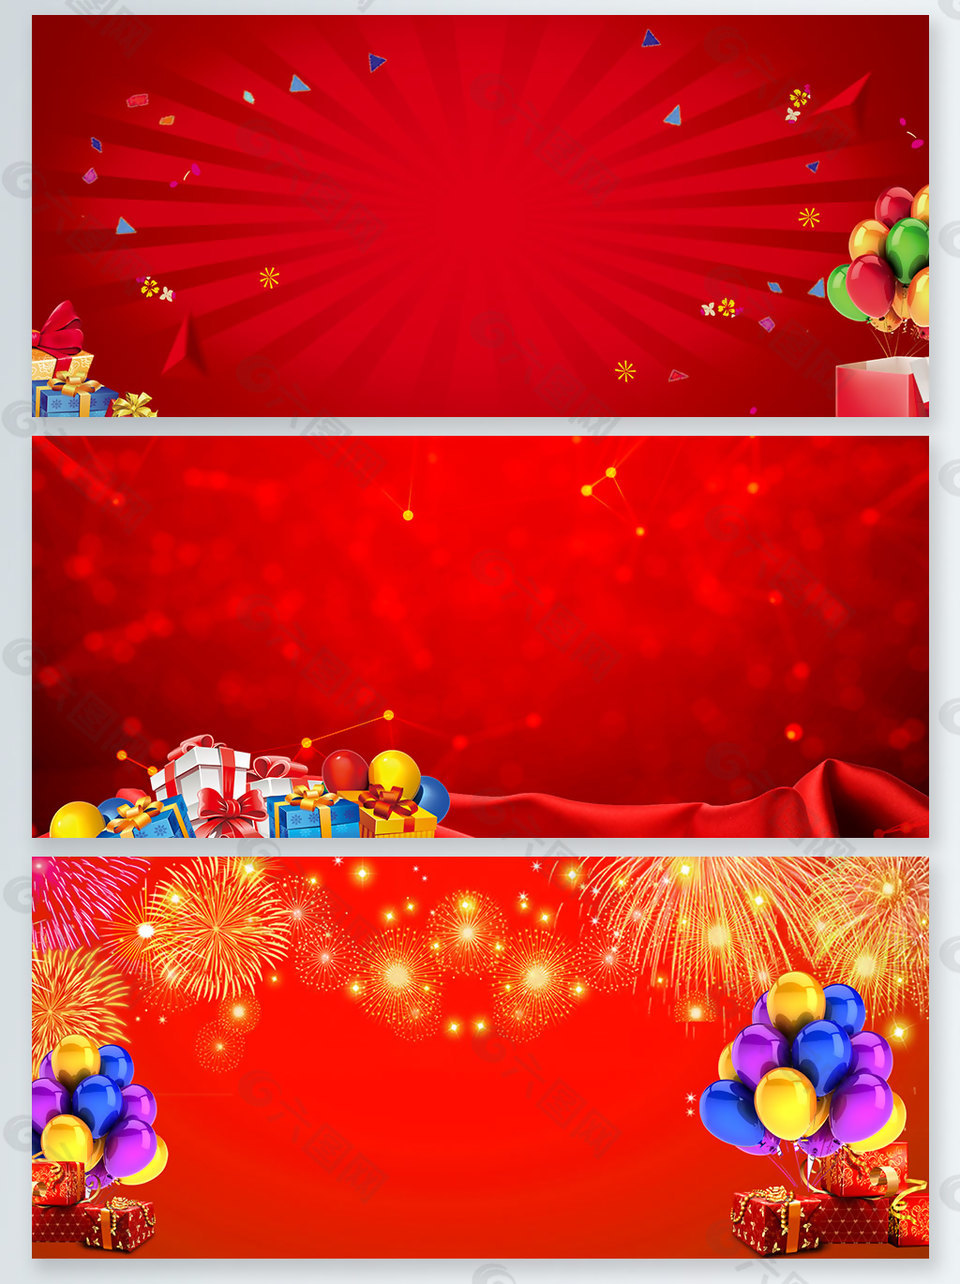 红色喜庆新年礼品盒banner背景